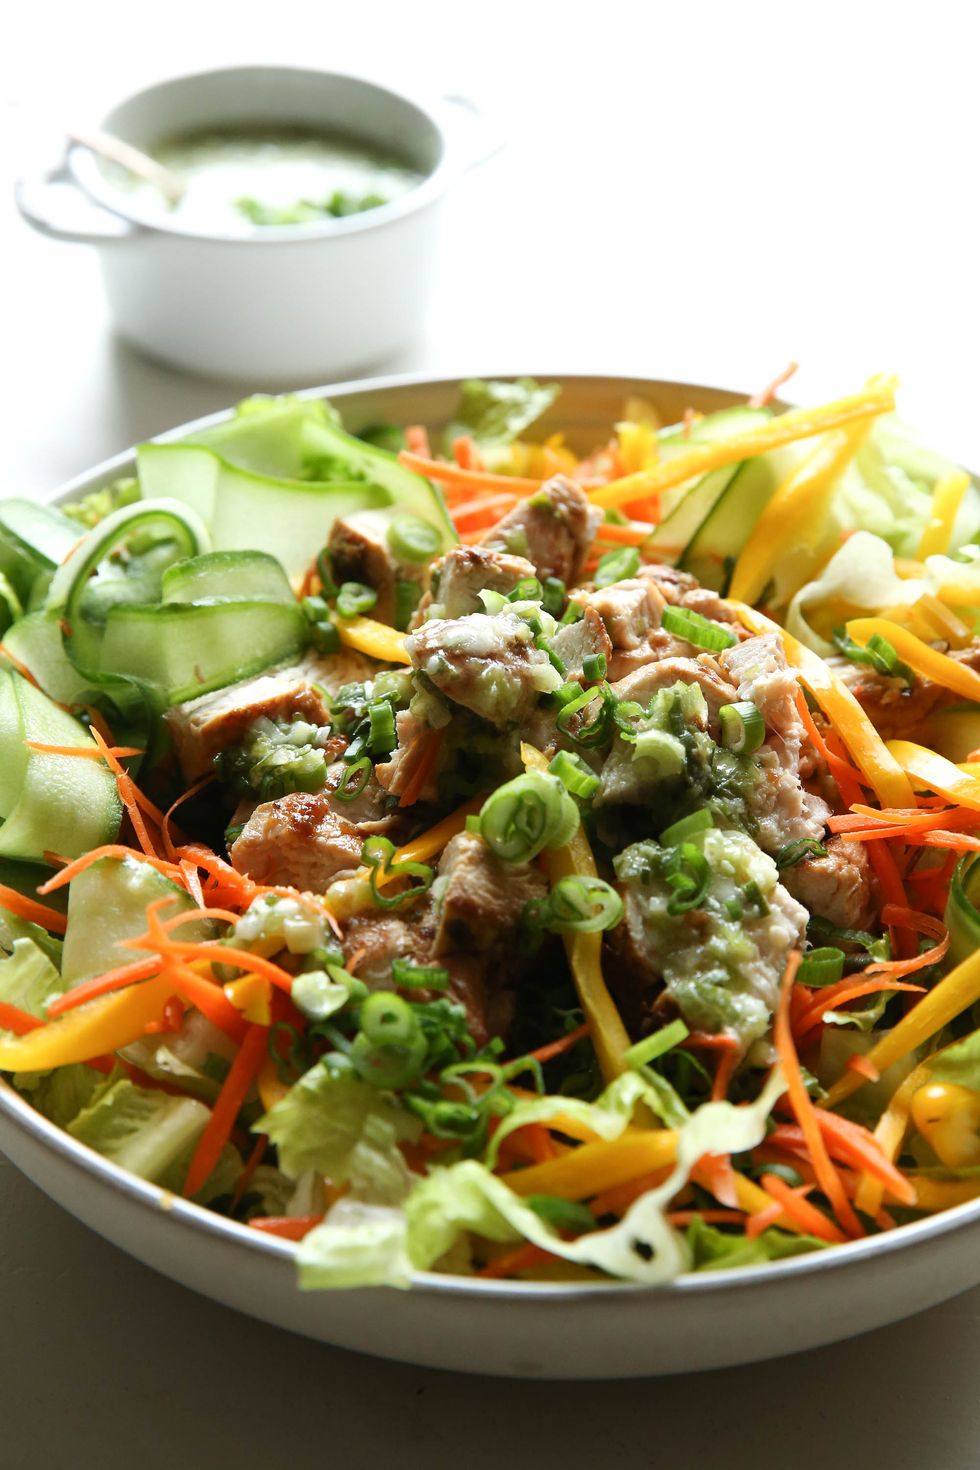 Asian Chicken Salad Vertical  Asian Chicken Salad 1487255411 asian chicken saladp1